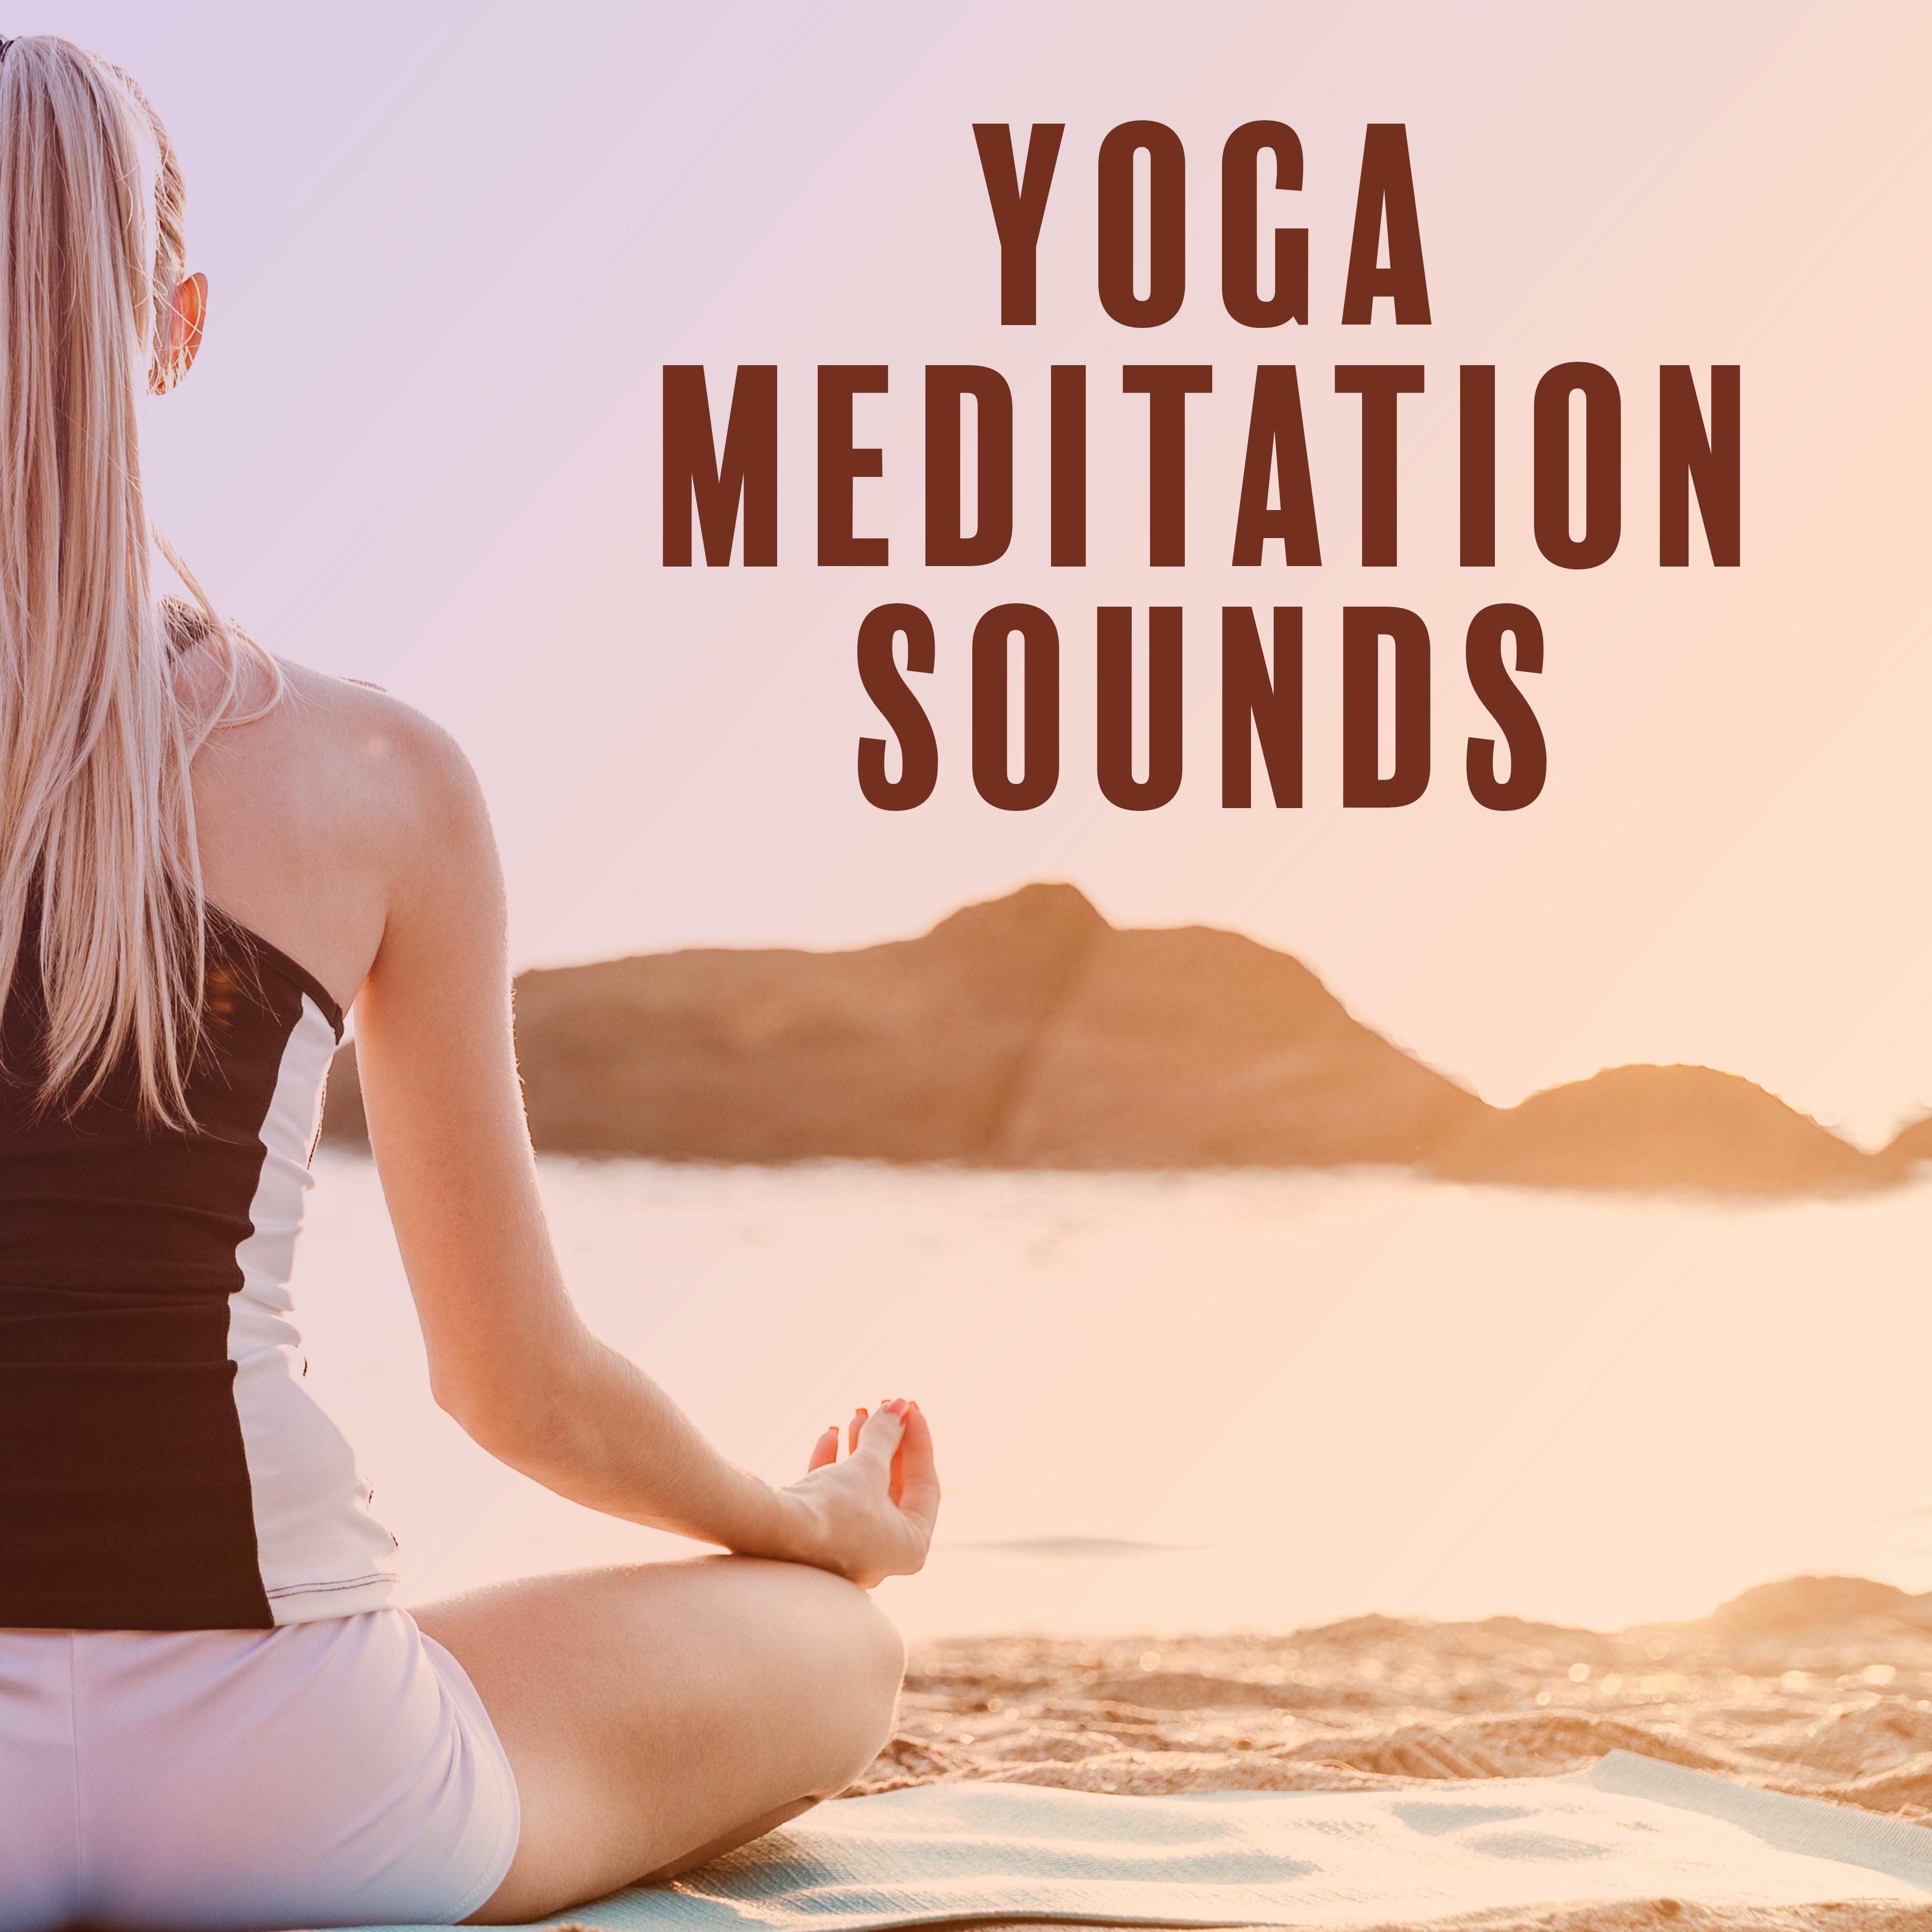 Yoga Meditation Sounds – Calming New Age Music for Yoga Training, Spirit Relaxation, Calmness Mind & Body